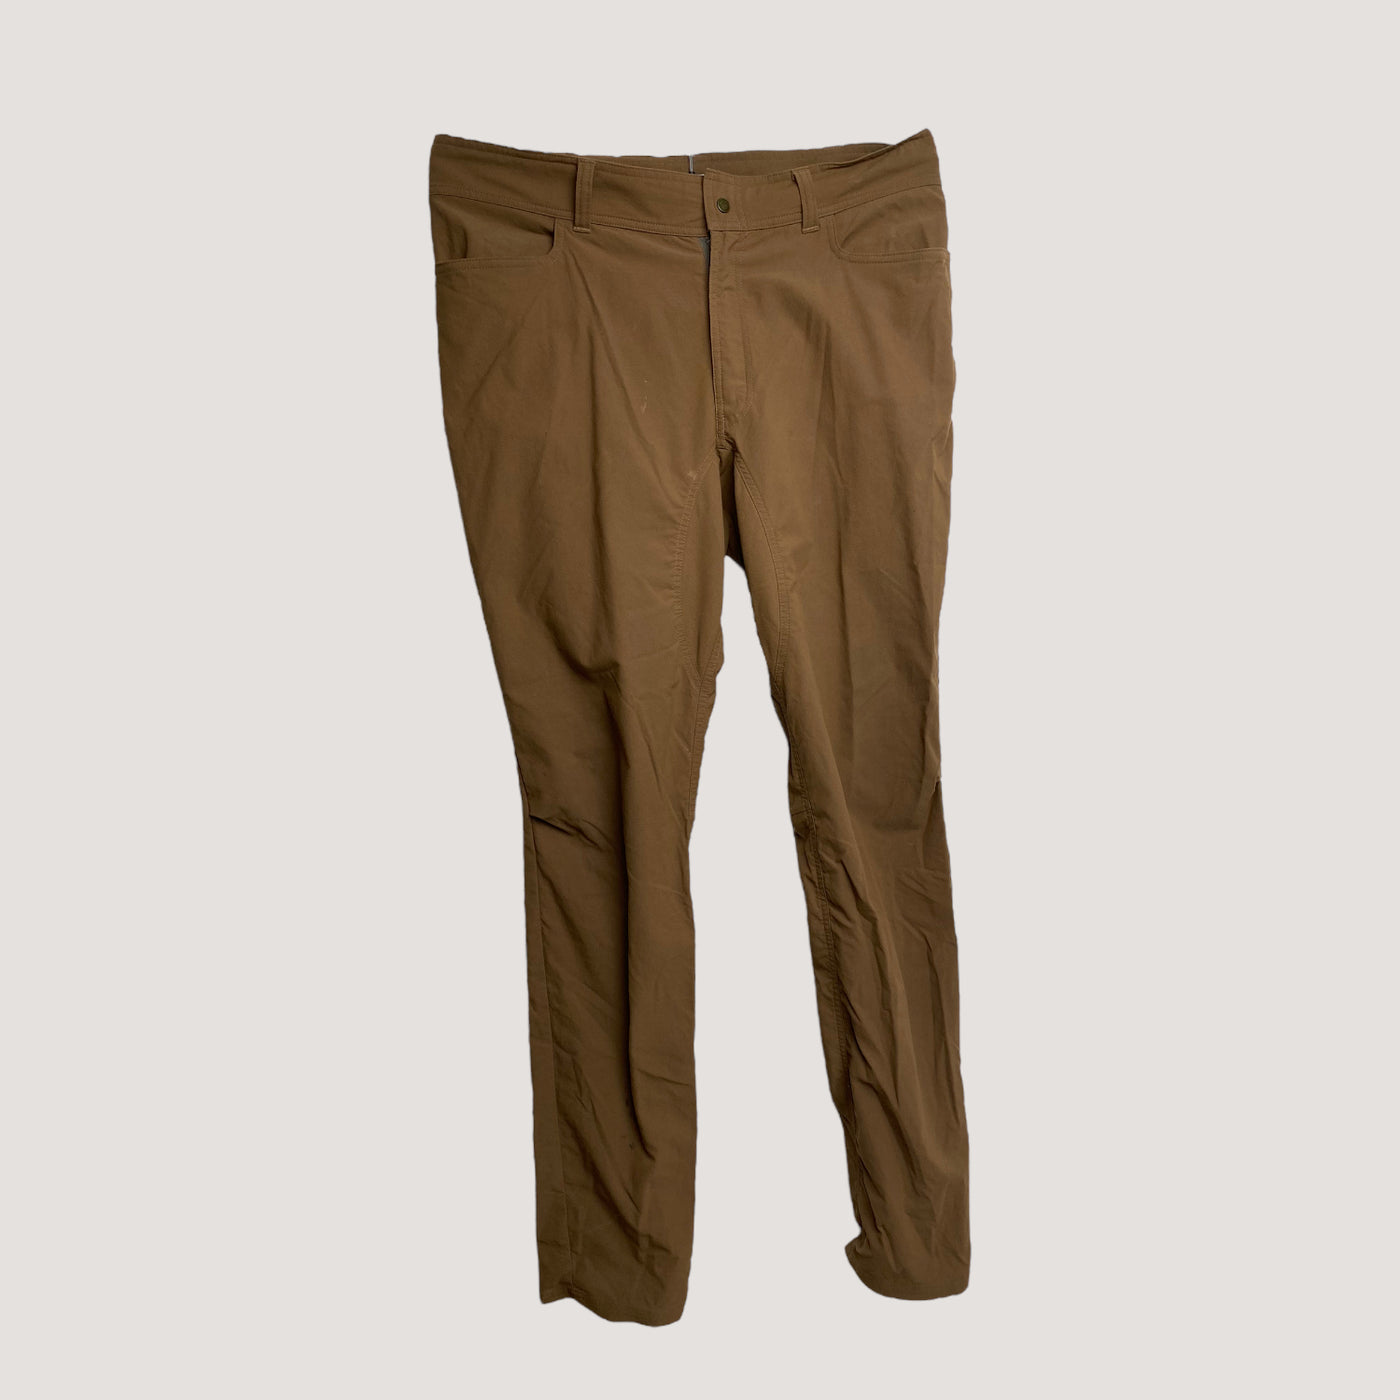 Röyk atlas pants, chocolate | man L